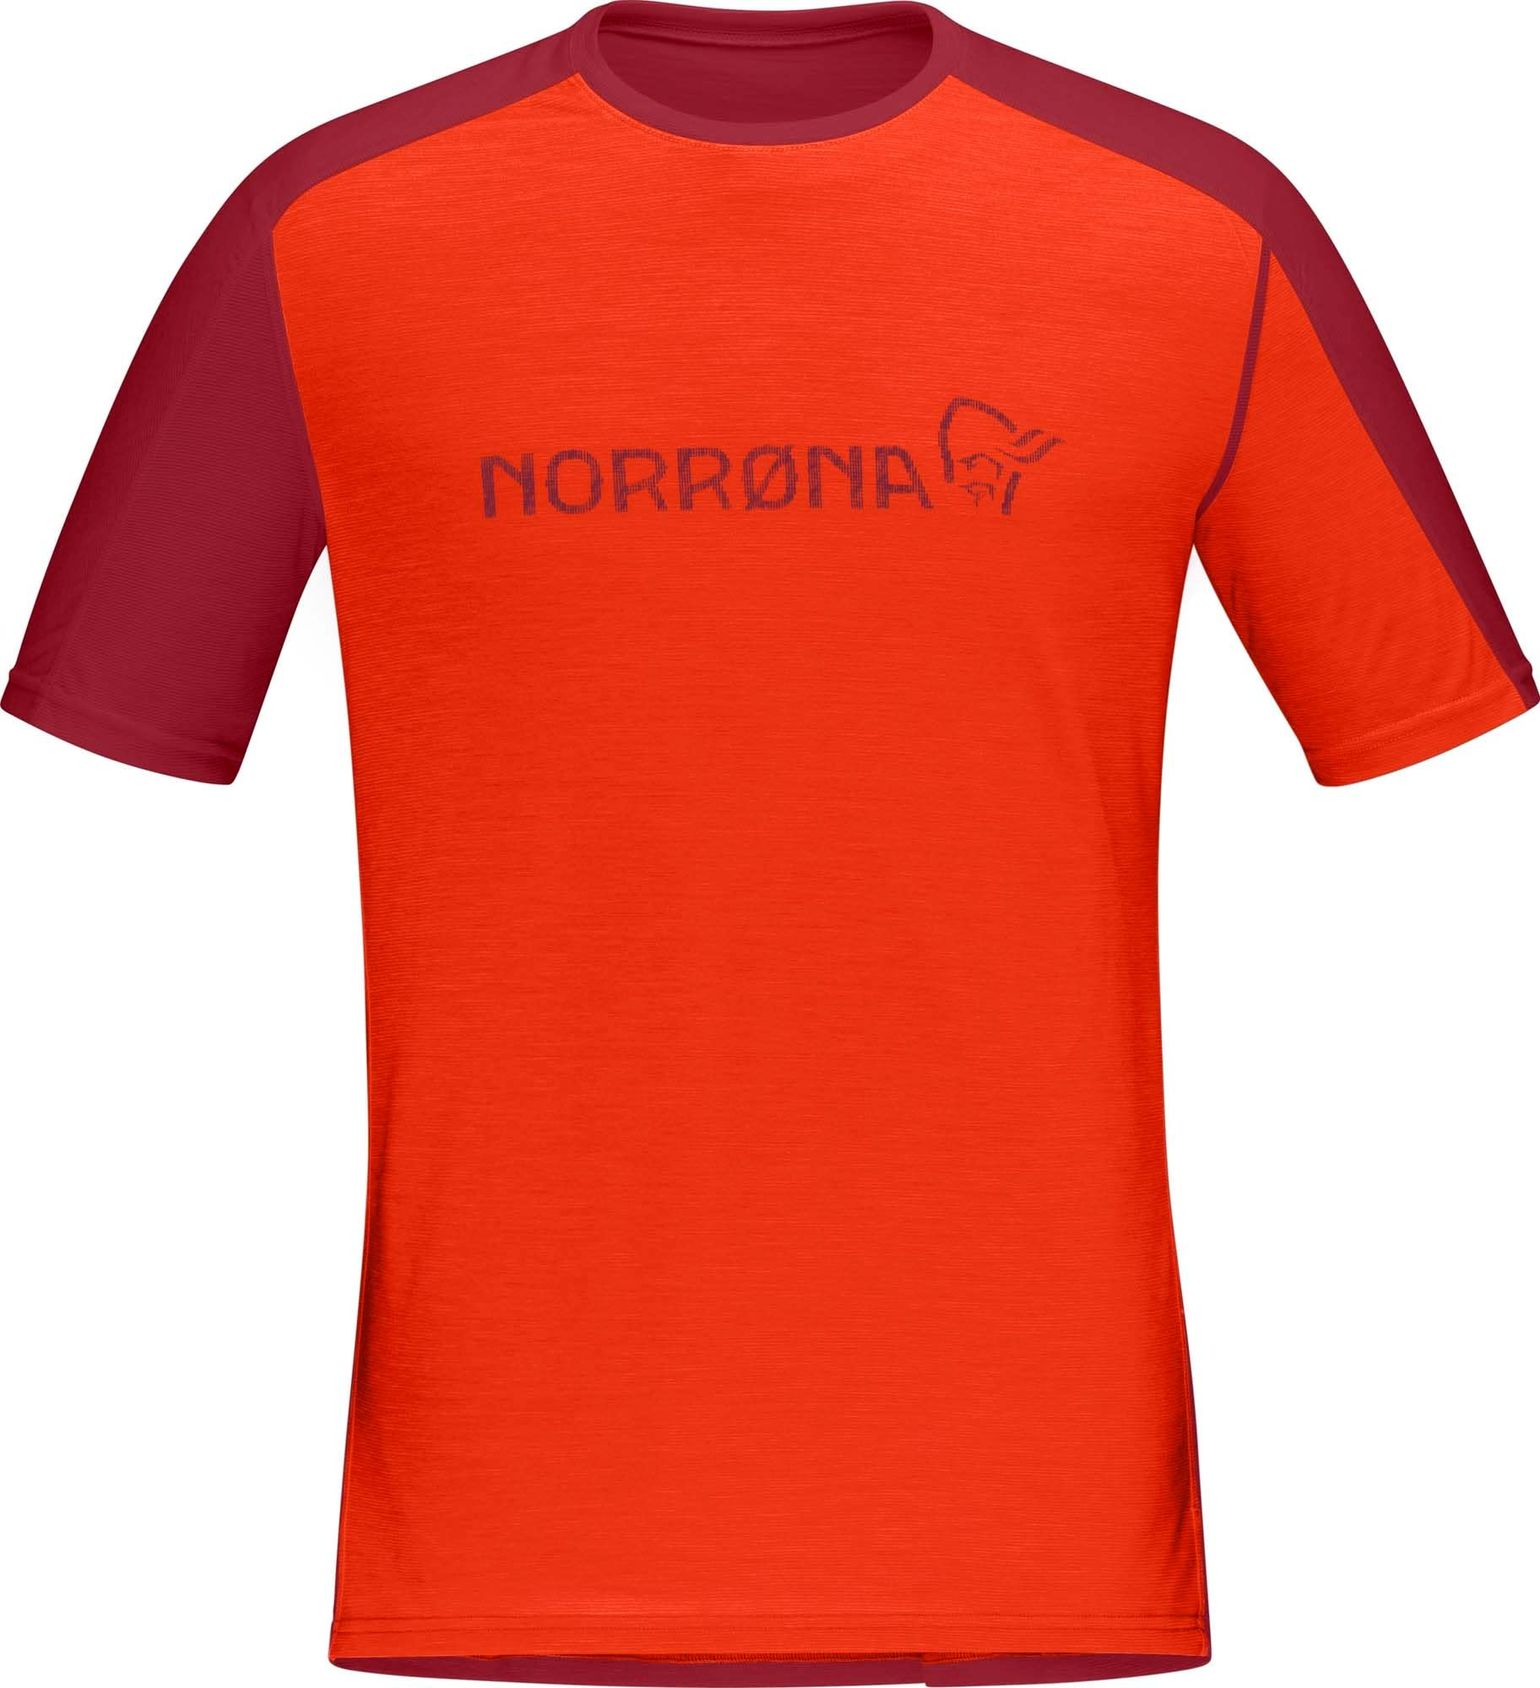 Men's Falketind Equaliser Merino T-Shirt Arednalin/Rhubarb